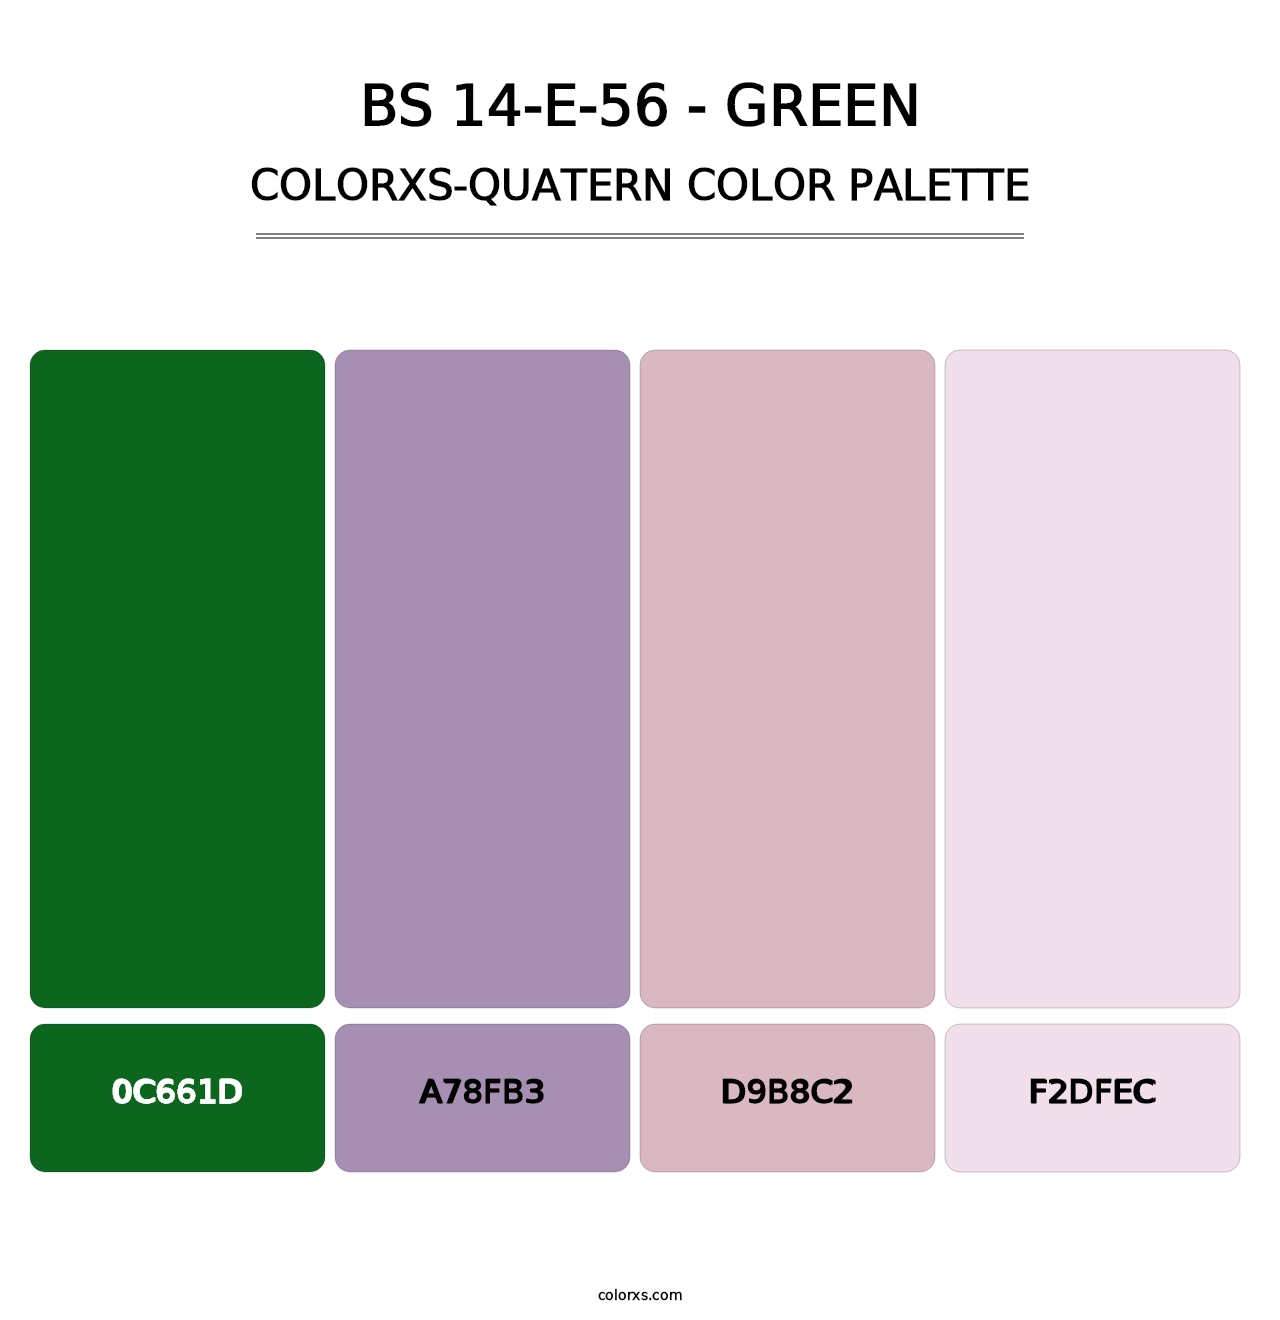 BS 14-E-56 - Green - Colorxs Quatern Palette